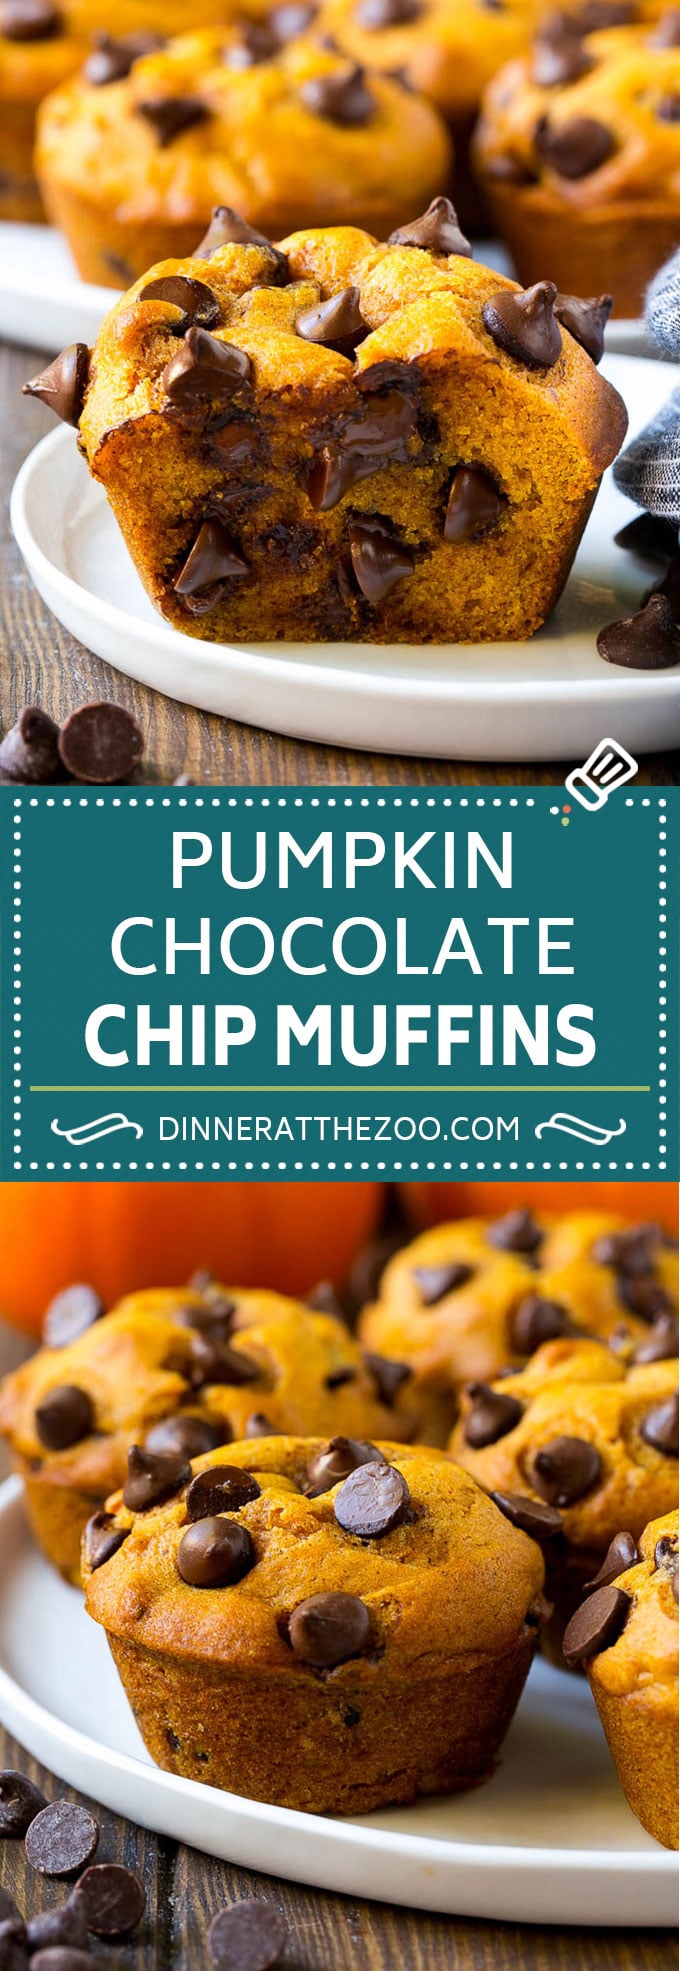 Pumpkin Chocolate Chip Muffins Recipe | Pumpkin Muffins | Chocolate Pumpkin Muffins #muffins #pumpkin #fall #chocolate #dessert #snack #dinneratthezoo